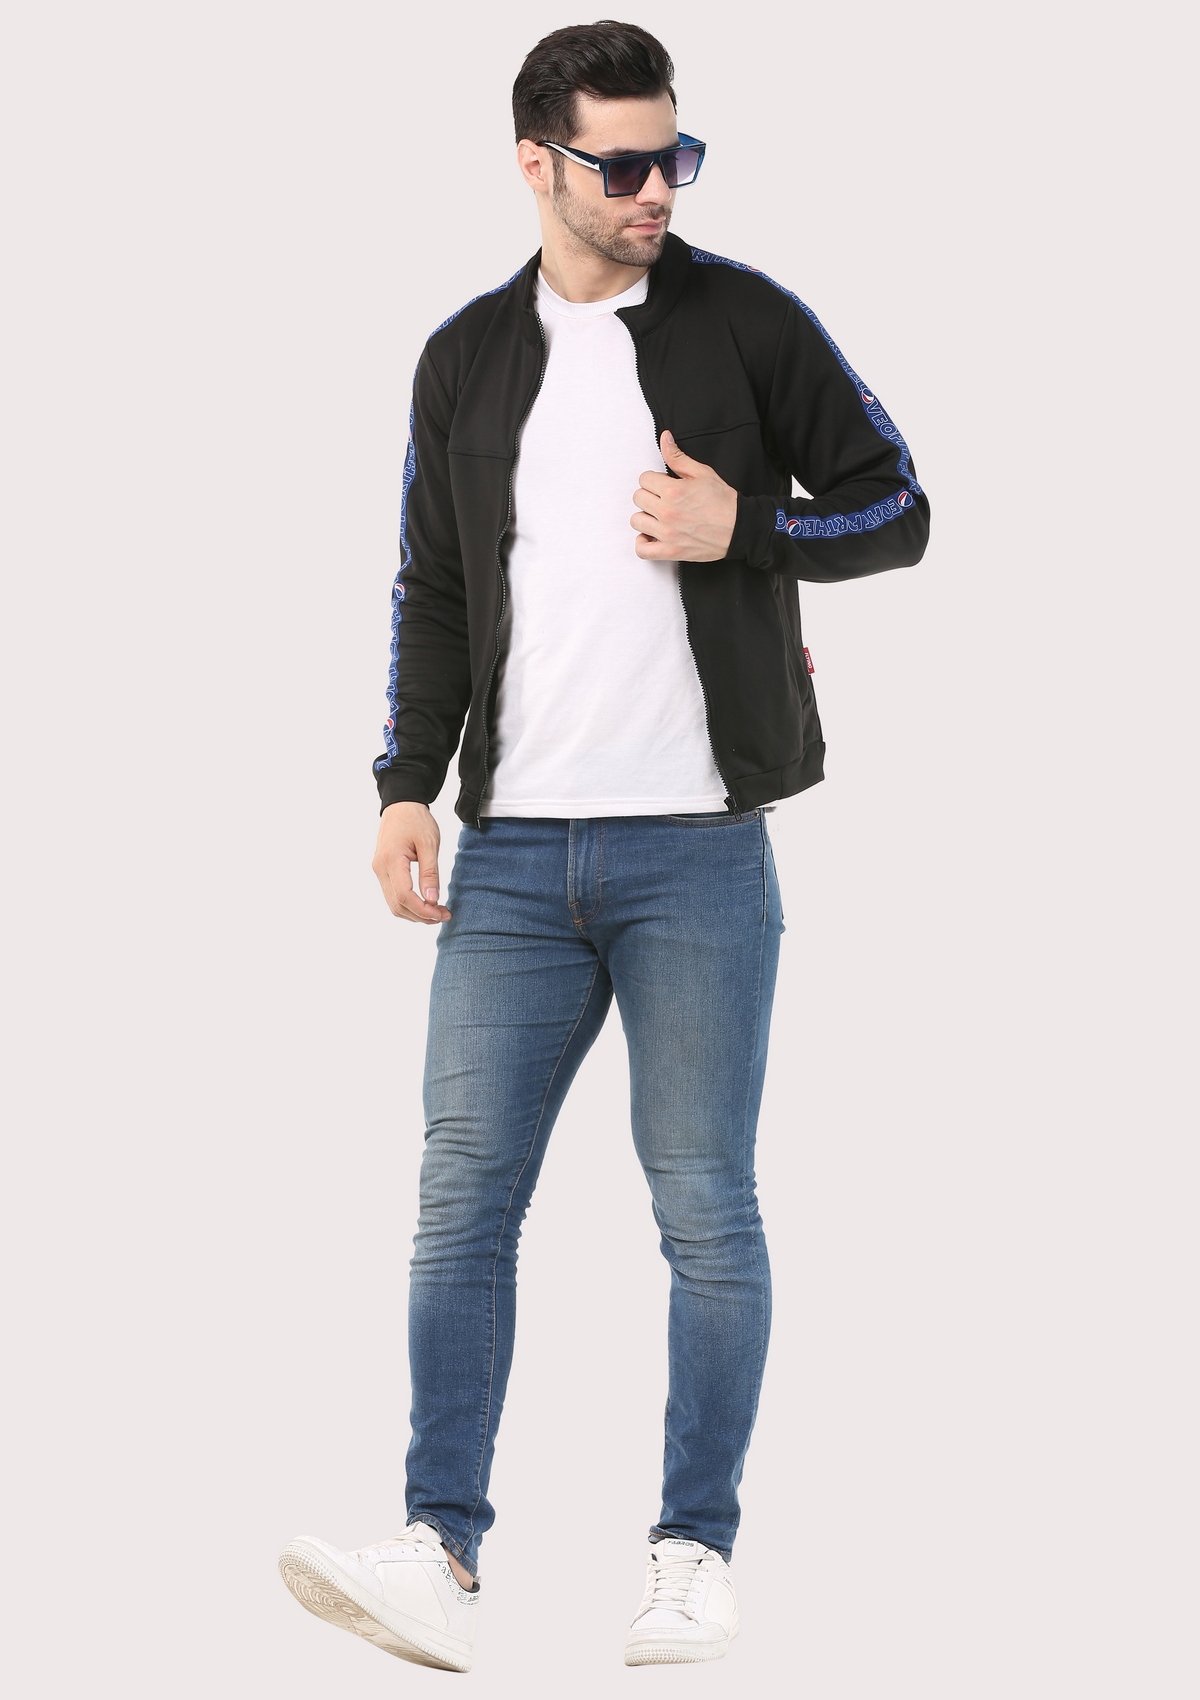 SOC PERFORMANCE | SOC Smart , Stylish & Warm Fleece Jacket 1